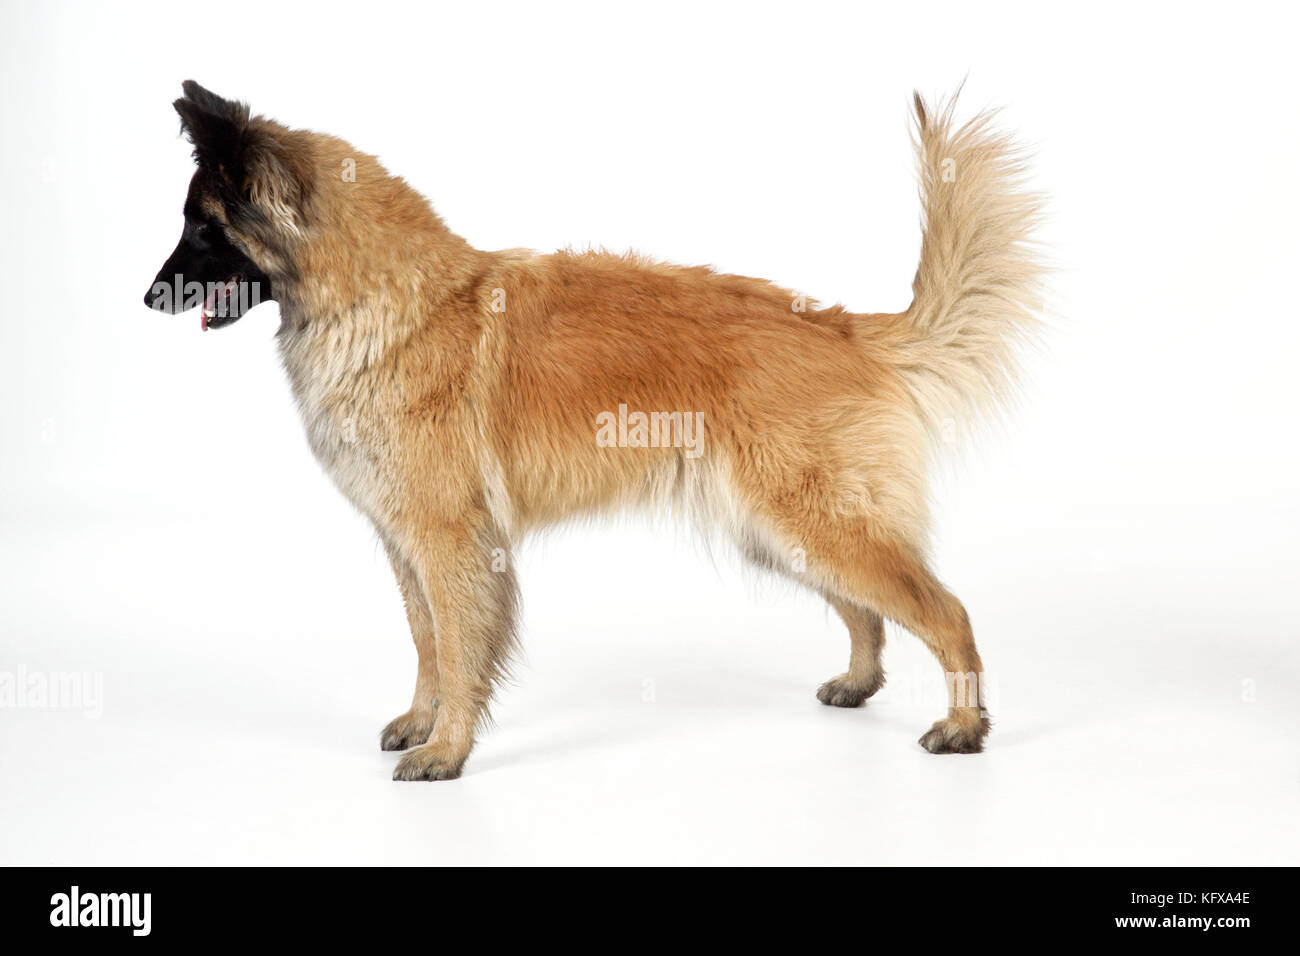 DOG Posture. Dominant Stock Photo